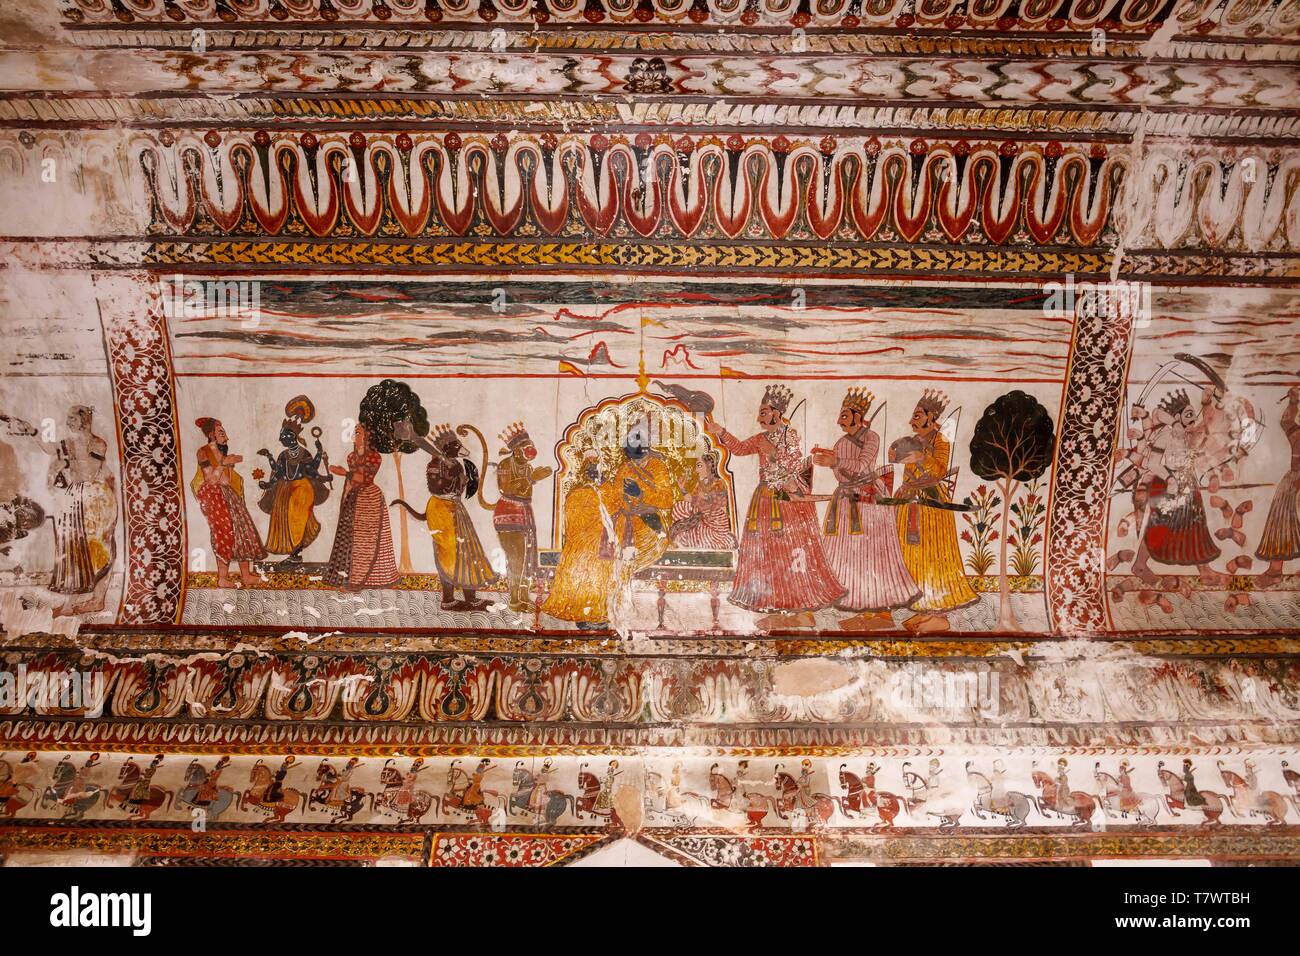 L'Inde, le Madhya Pradesh, Orchha, Raja Mahal Palace peinture murale Banque D'Images